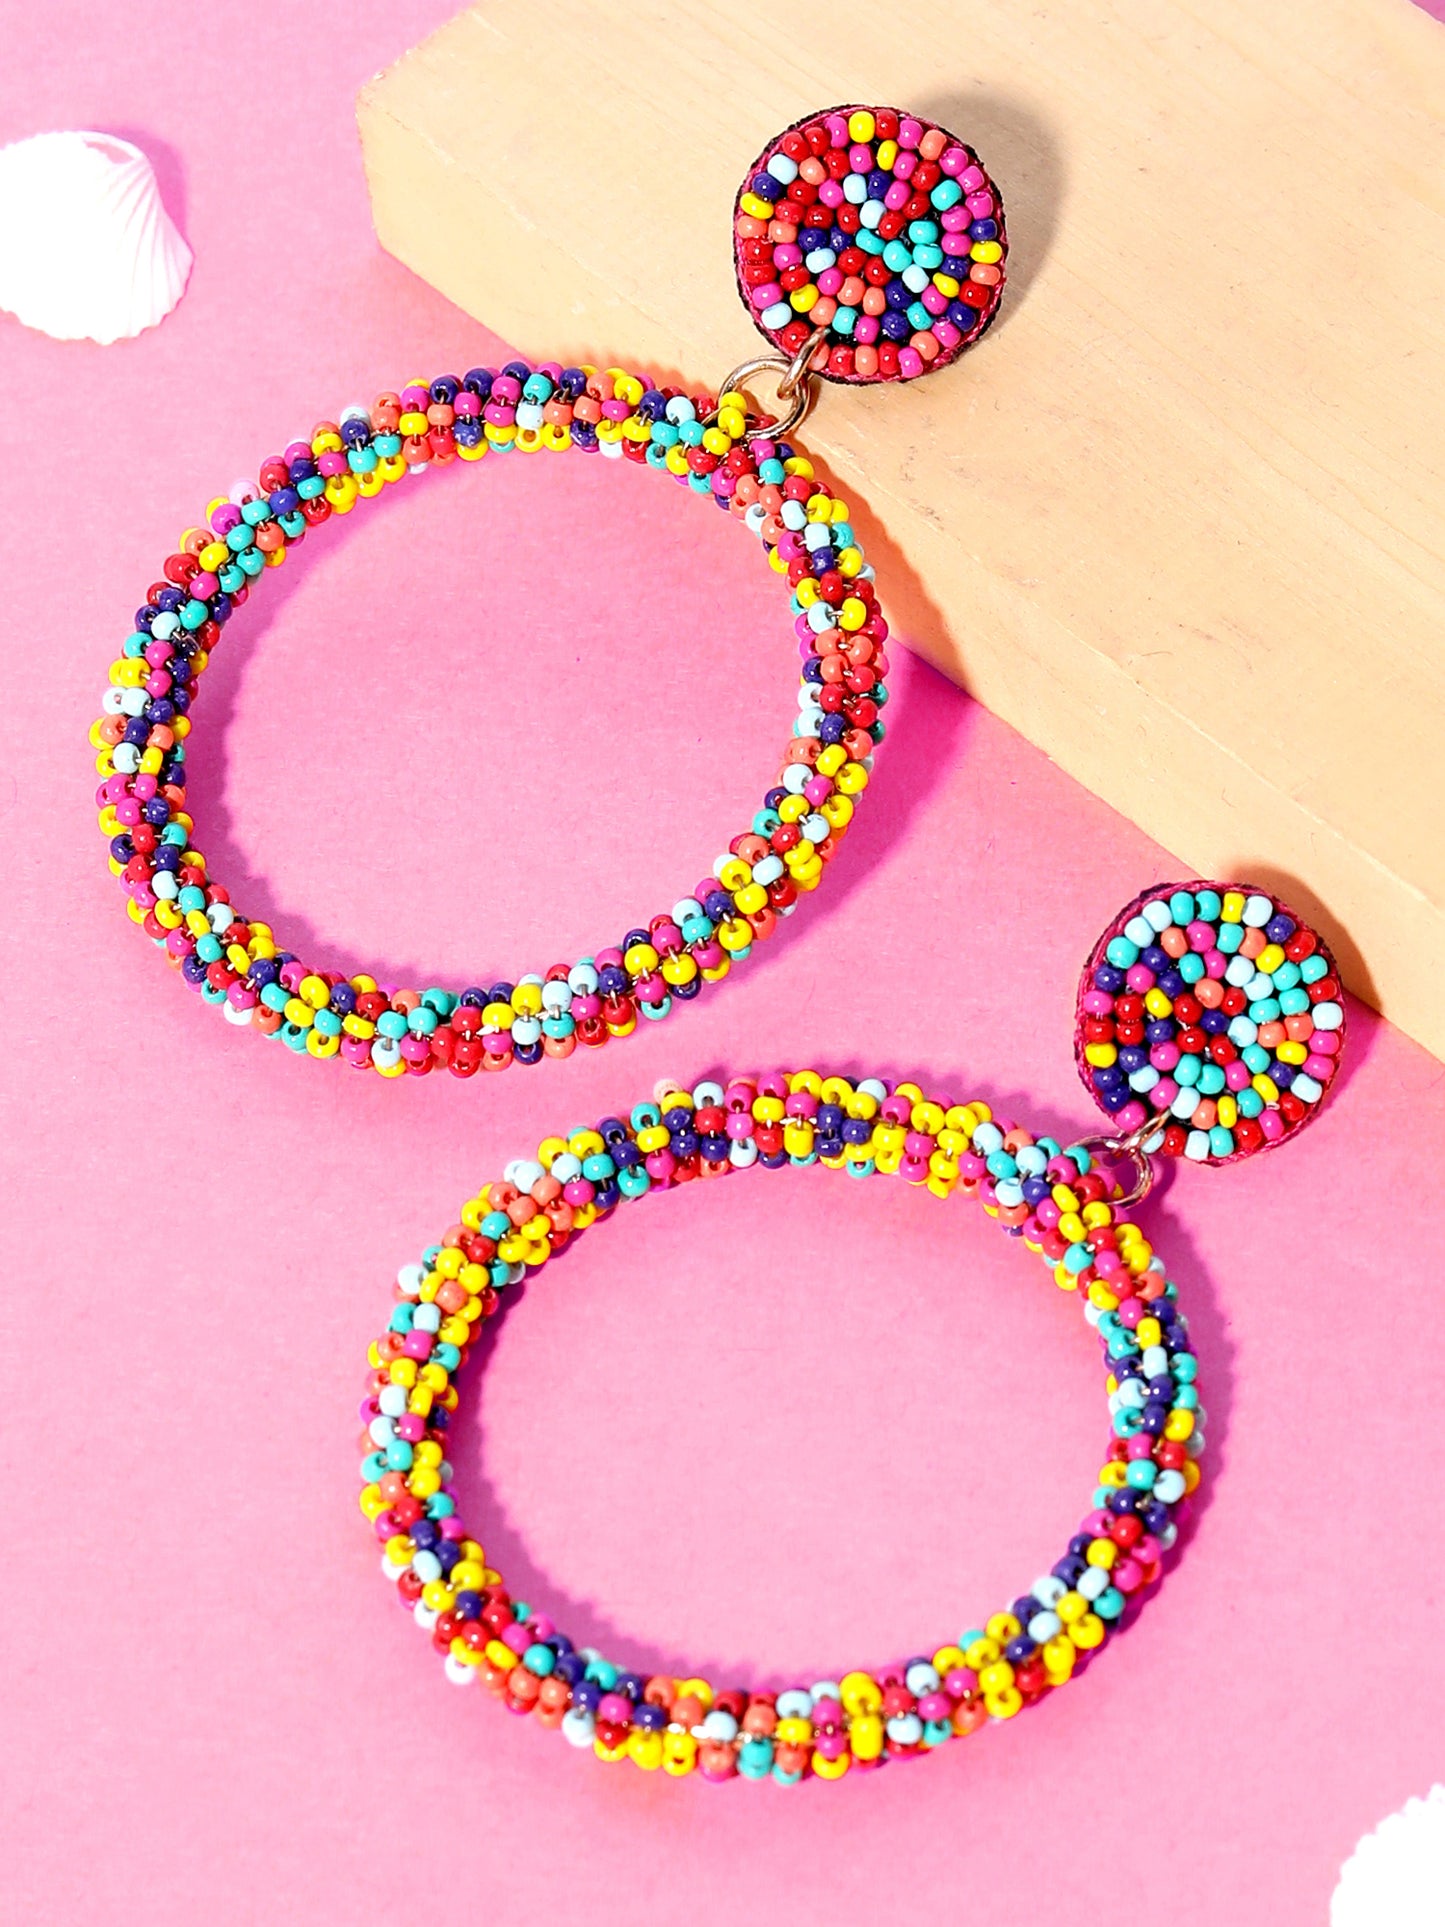 Blueberry multi beads embellished circular drop earring